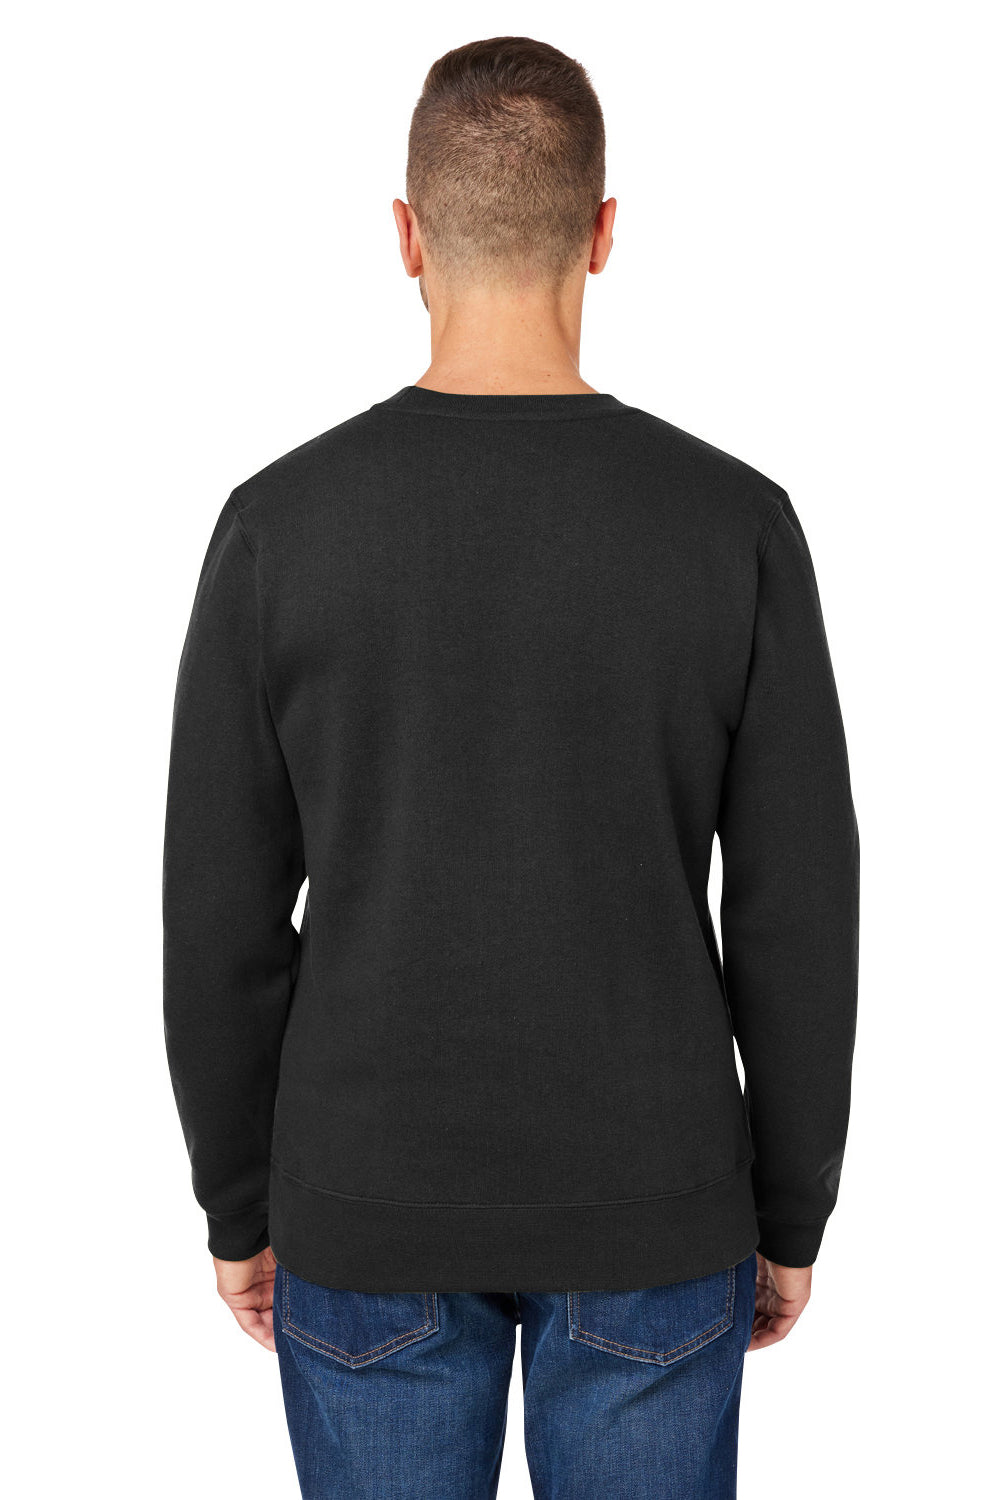 J America 8424JA Mens Premium Fleece Crewneck Sweatshirt Black Back